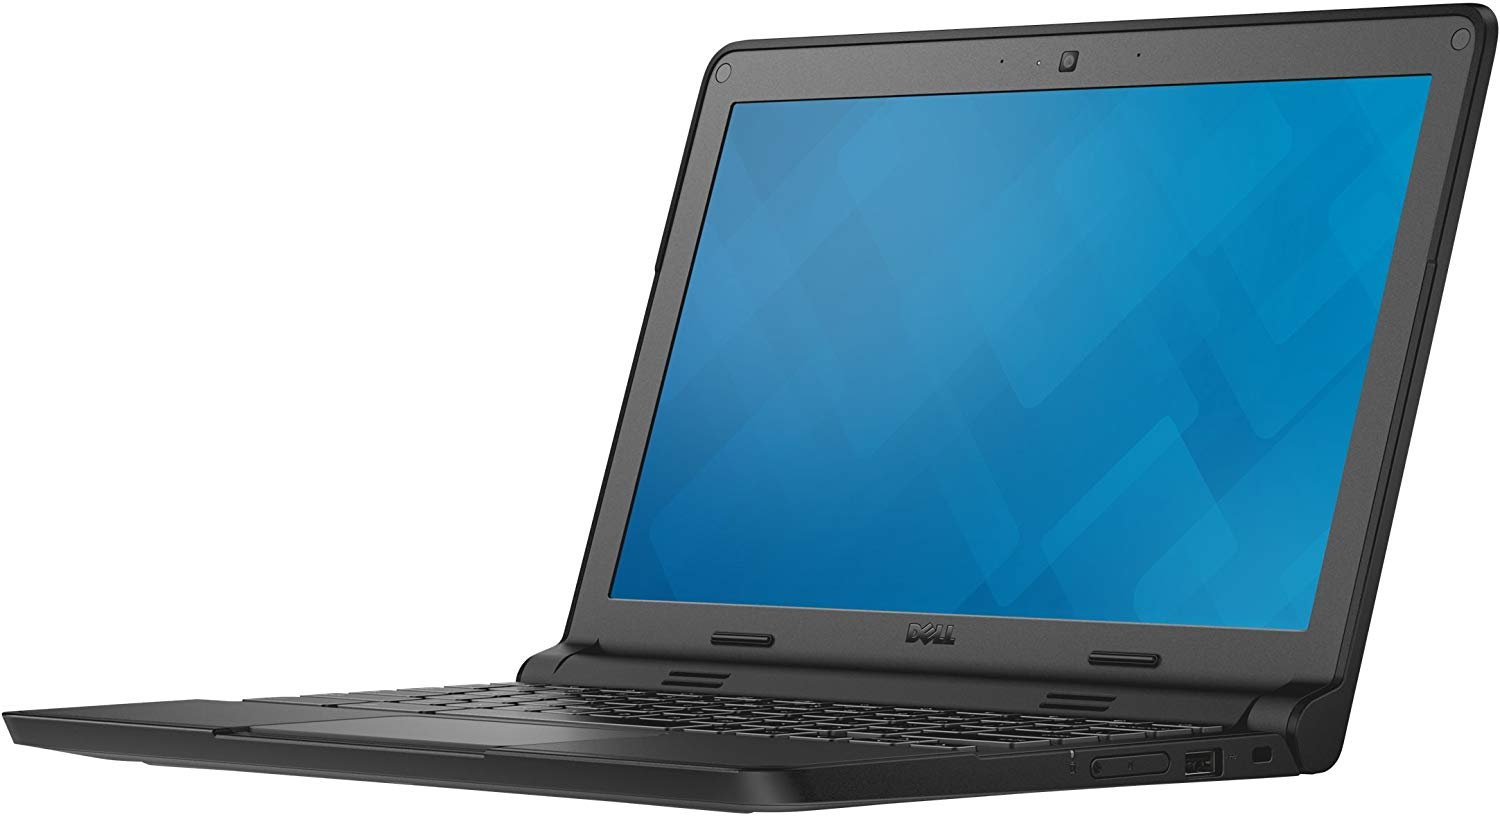 Dell Chromebook 11 Refurb Deal